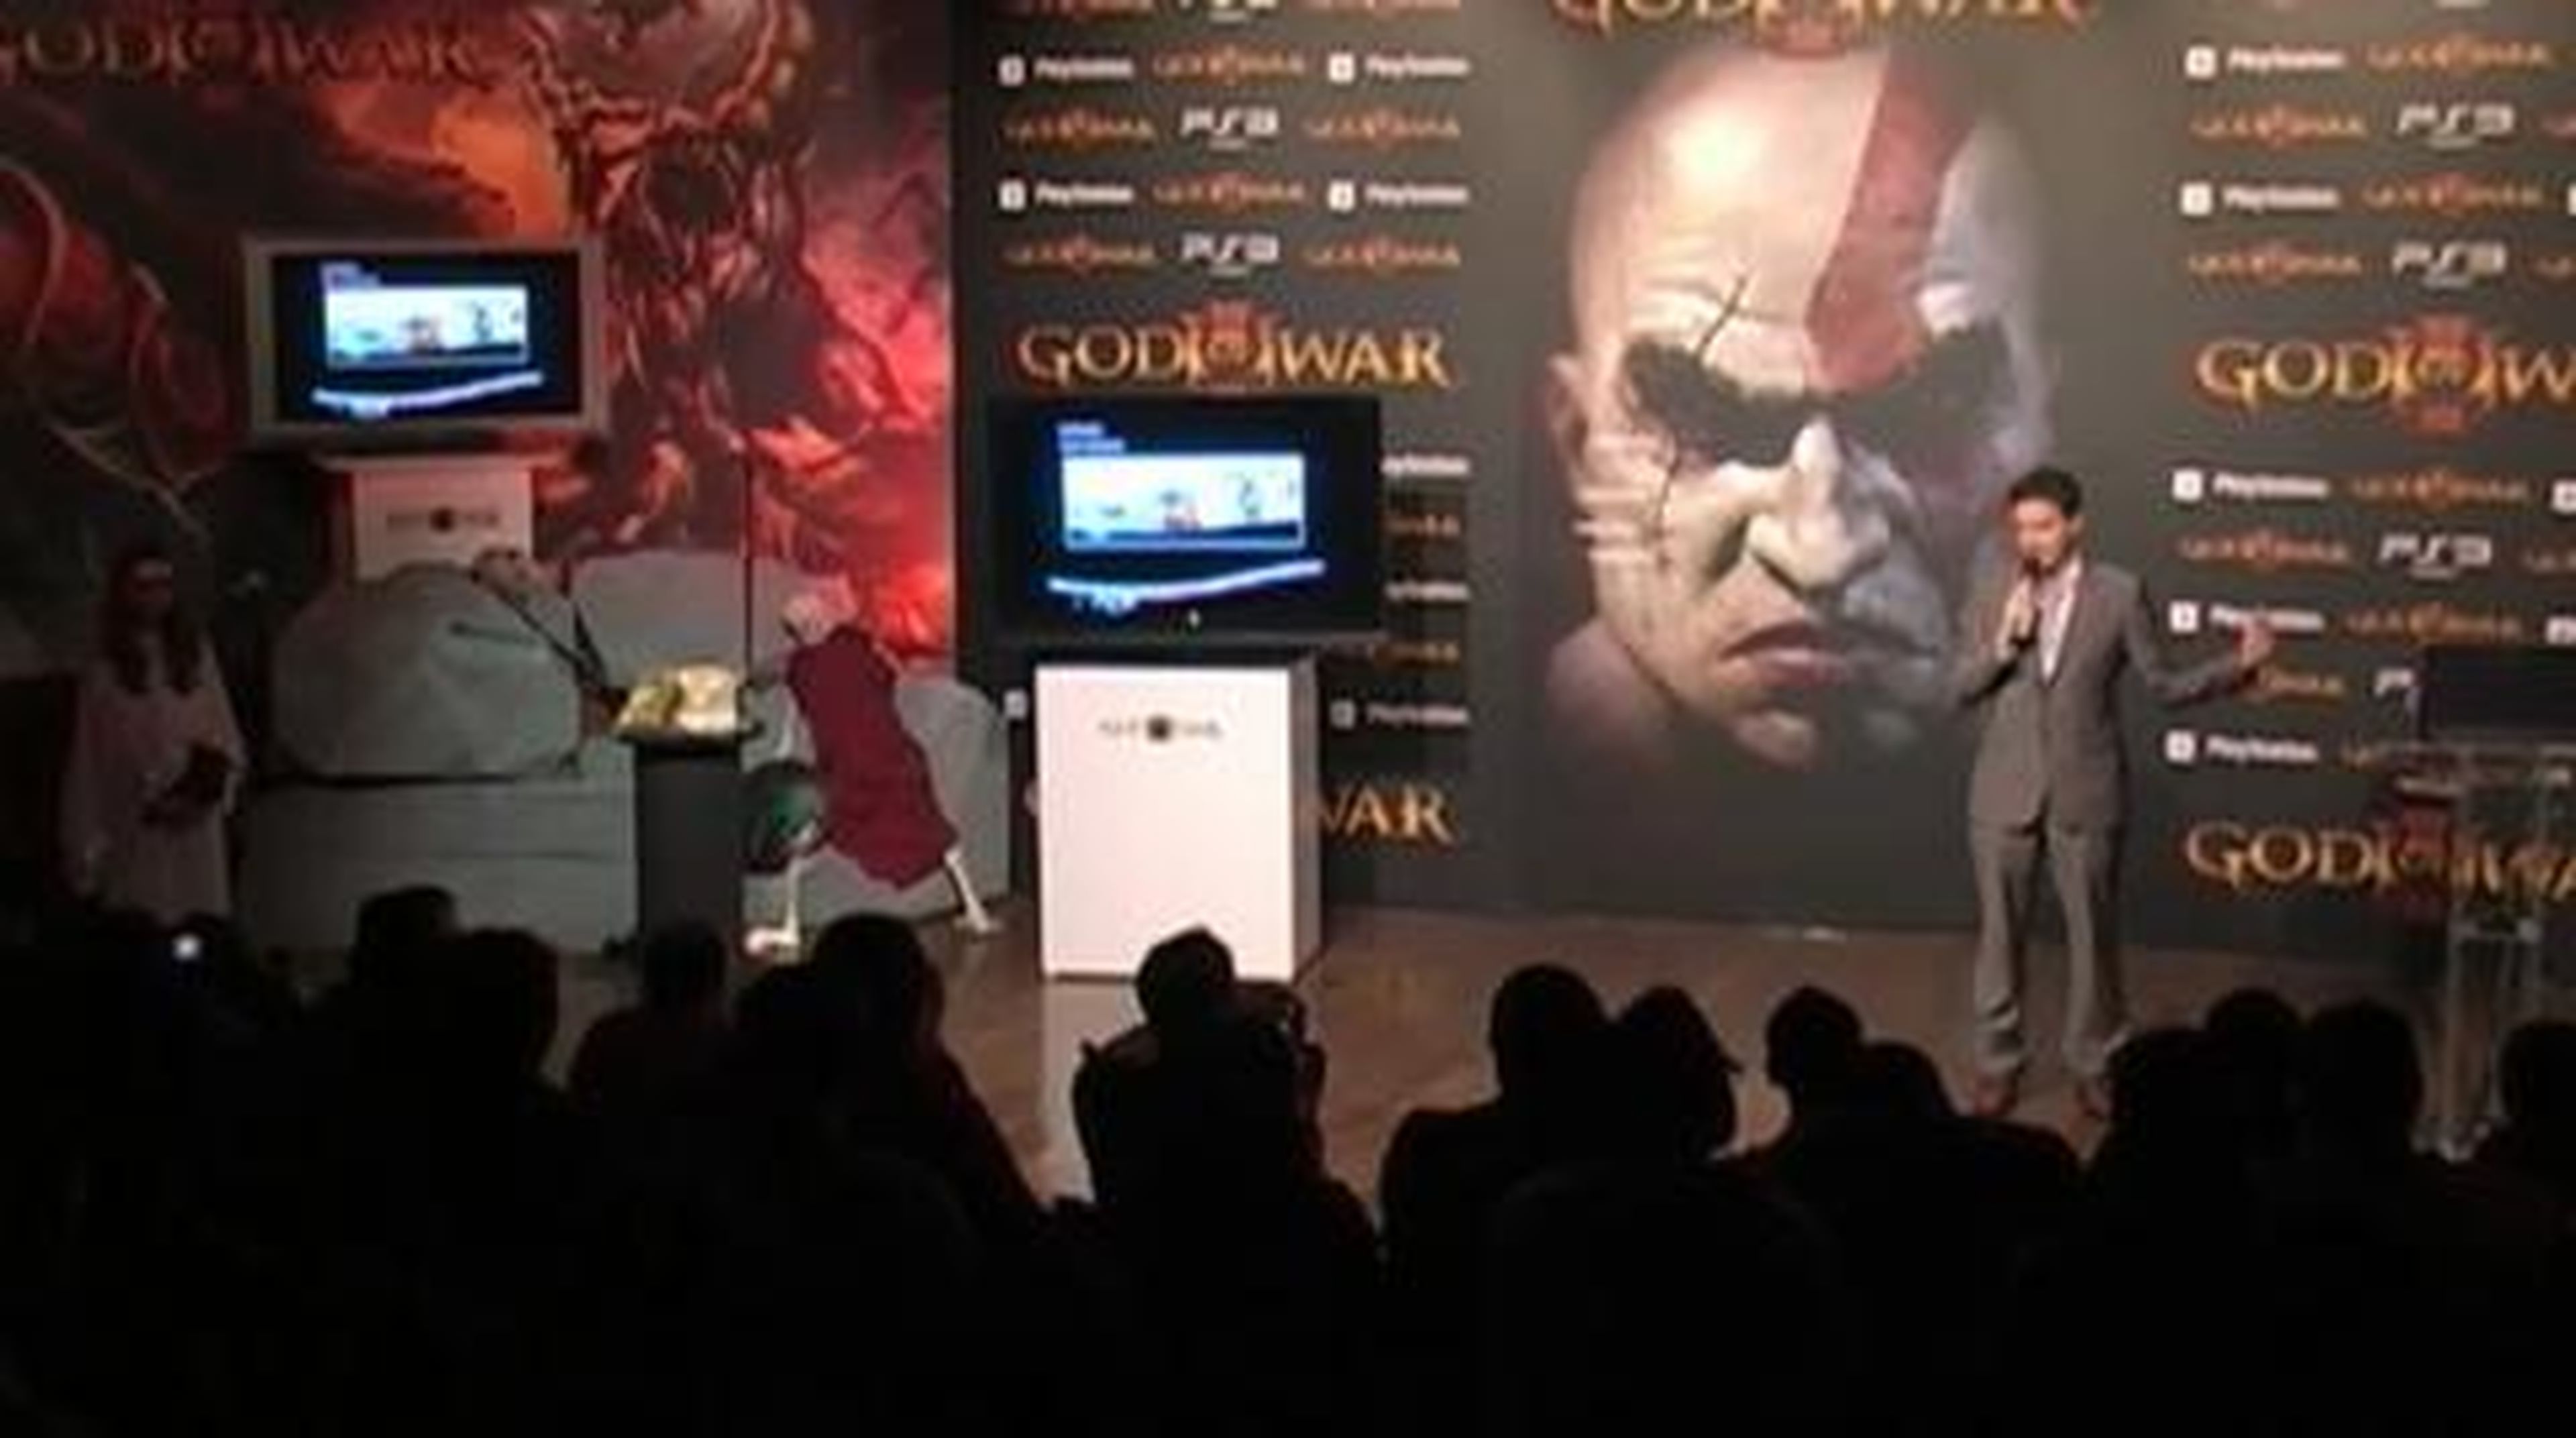 Presentacion de God of War III en Madrid